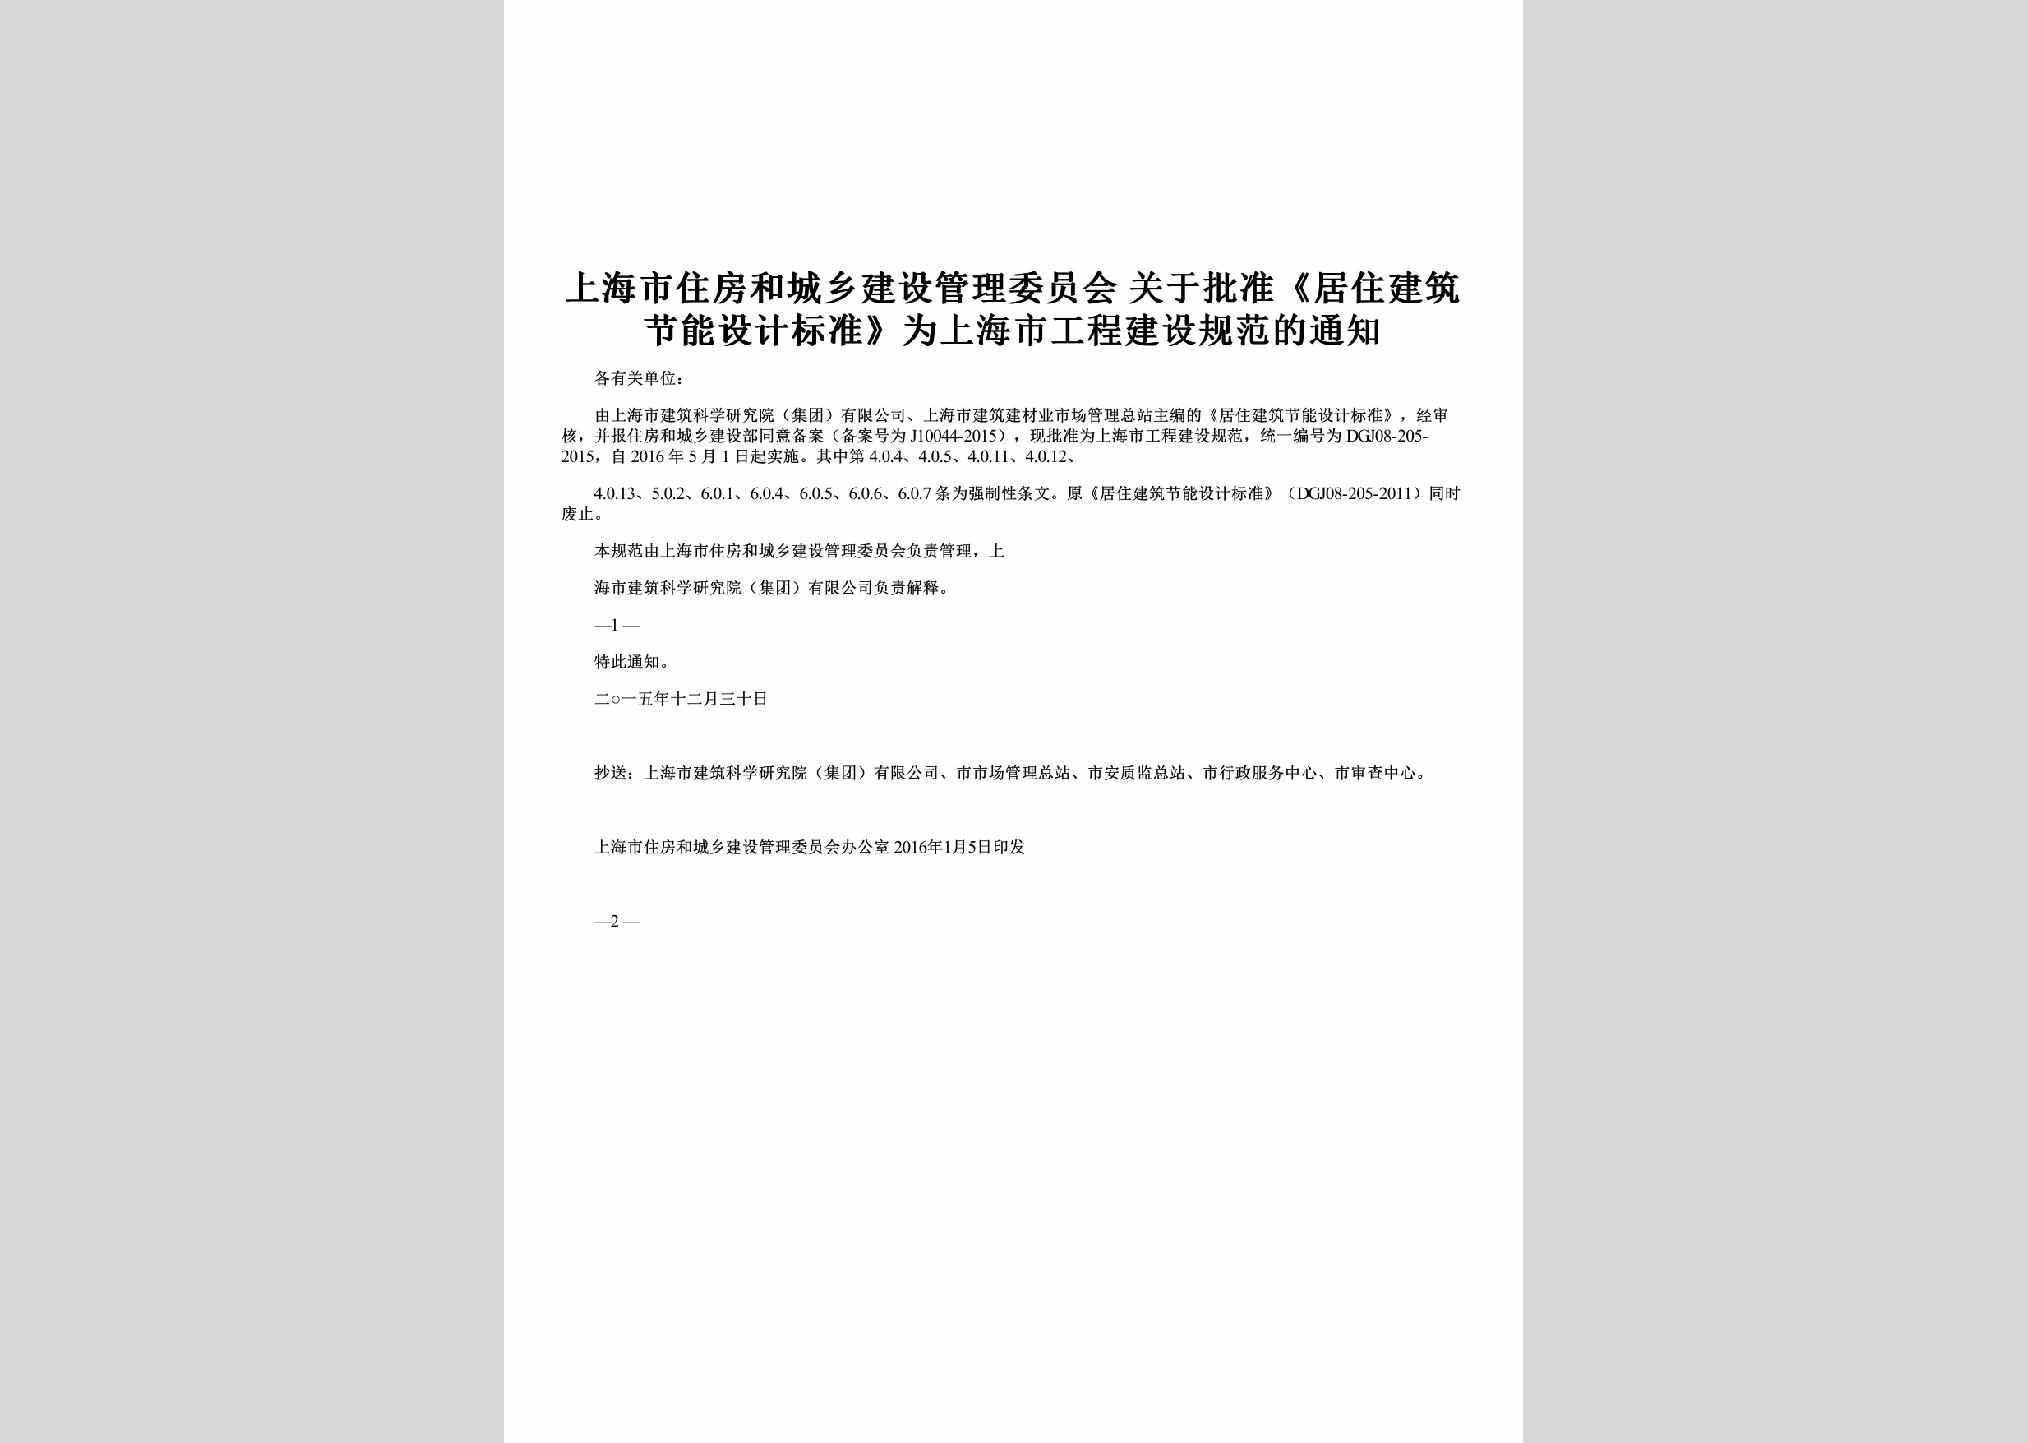 SH-JZJNGFTZ-2016：关于批准《居住建筑节能设计标准》为上海市工程建设规范的通知